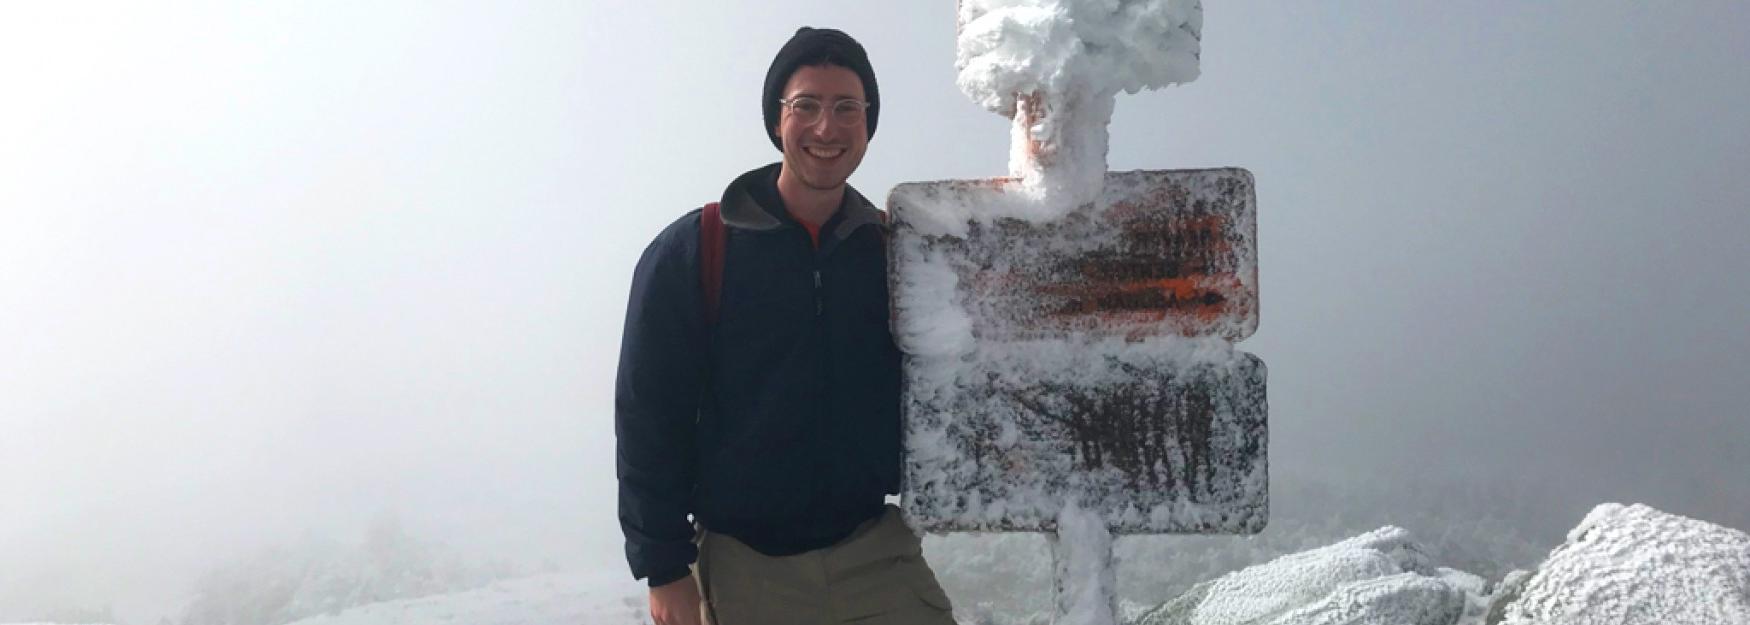 Mitchell Becker stands atop a snowy mountain in deep fog